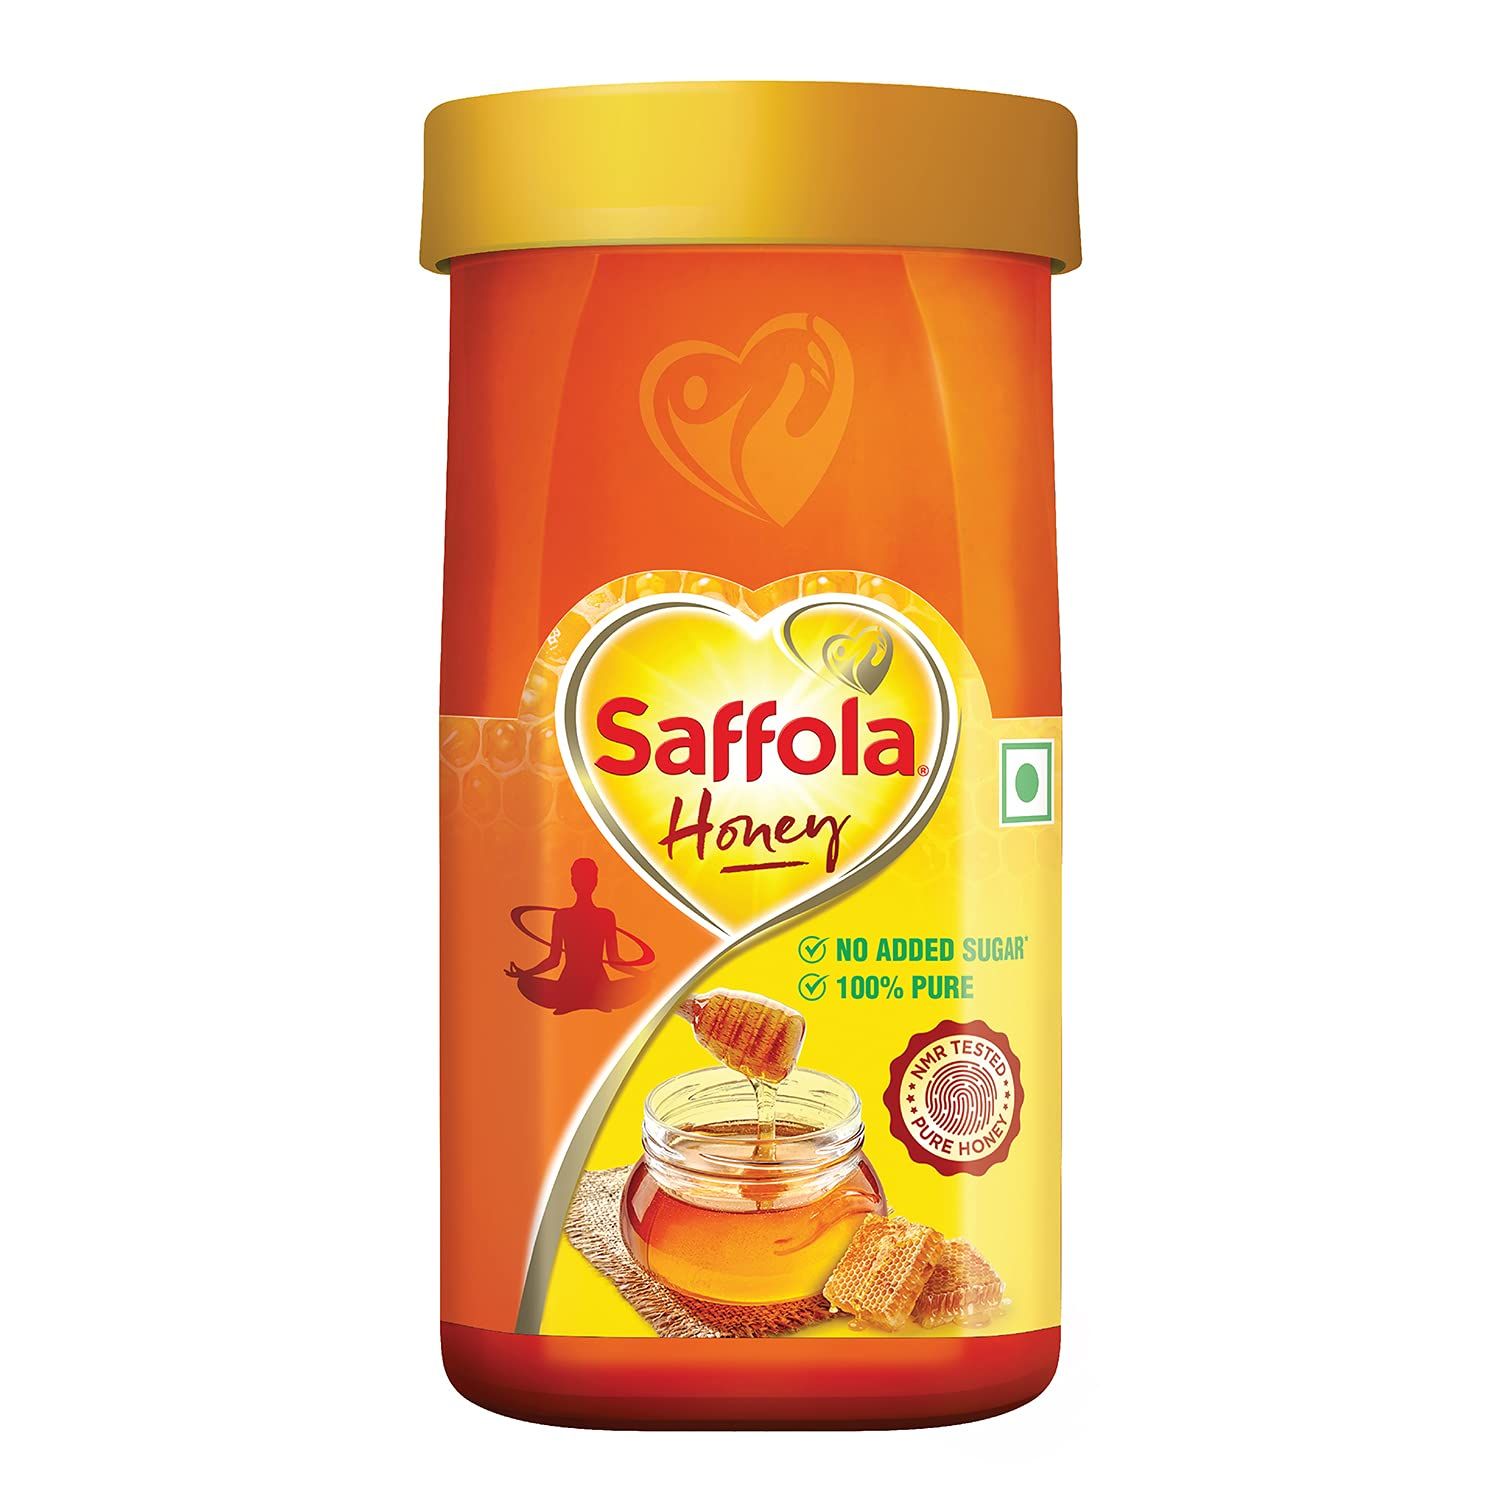 Saffola Honey Image